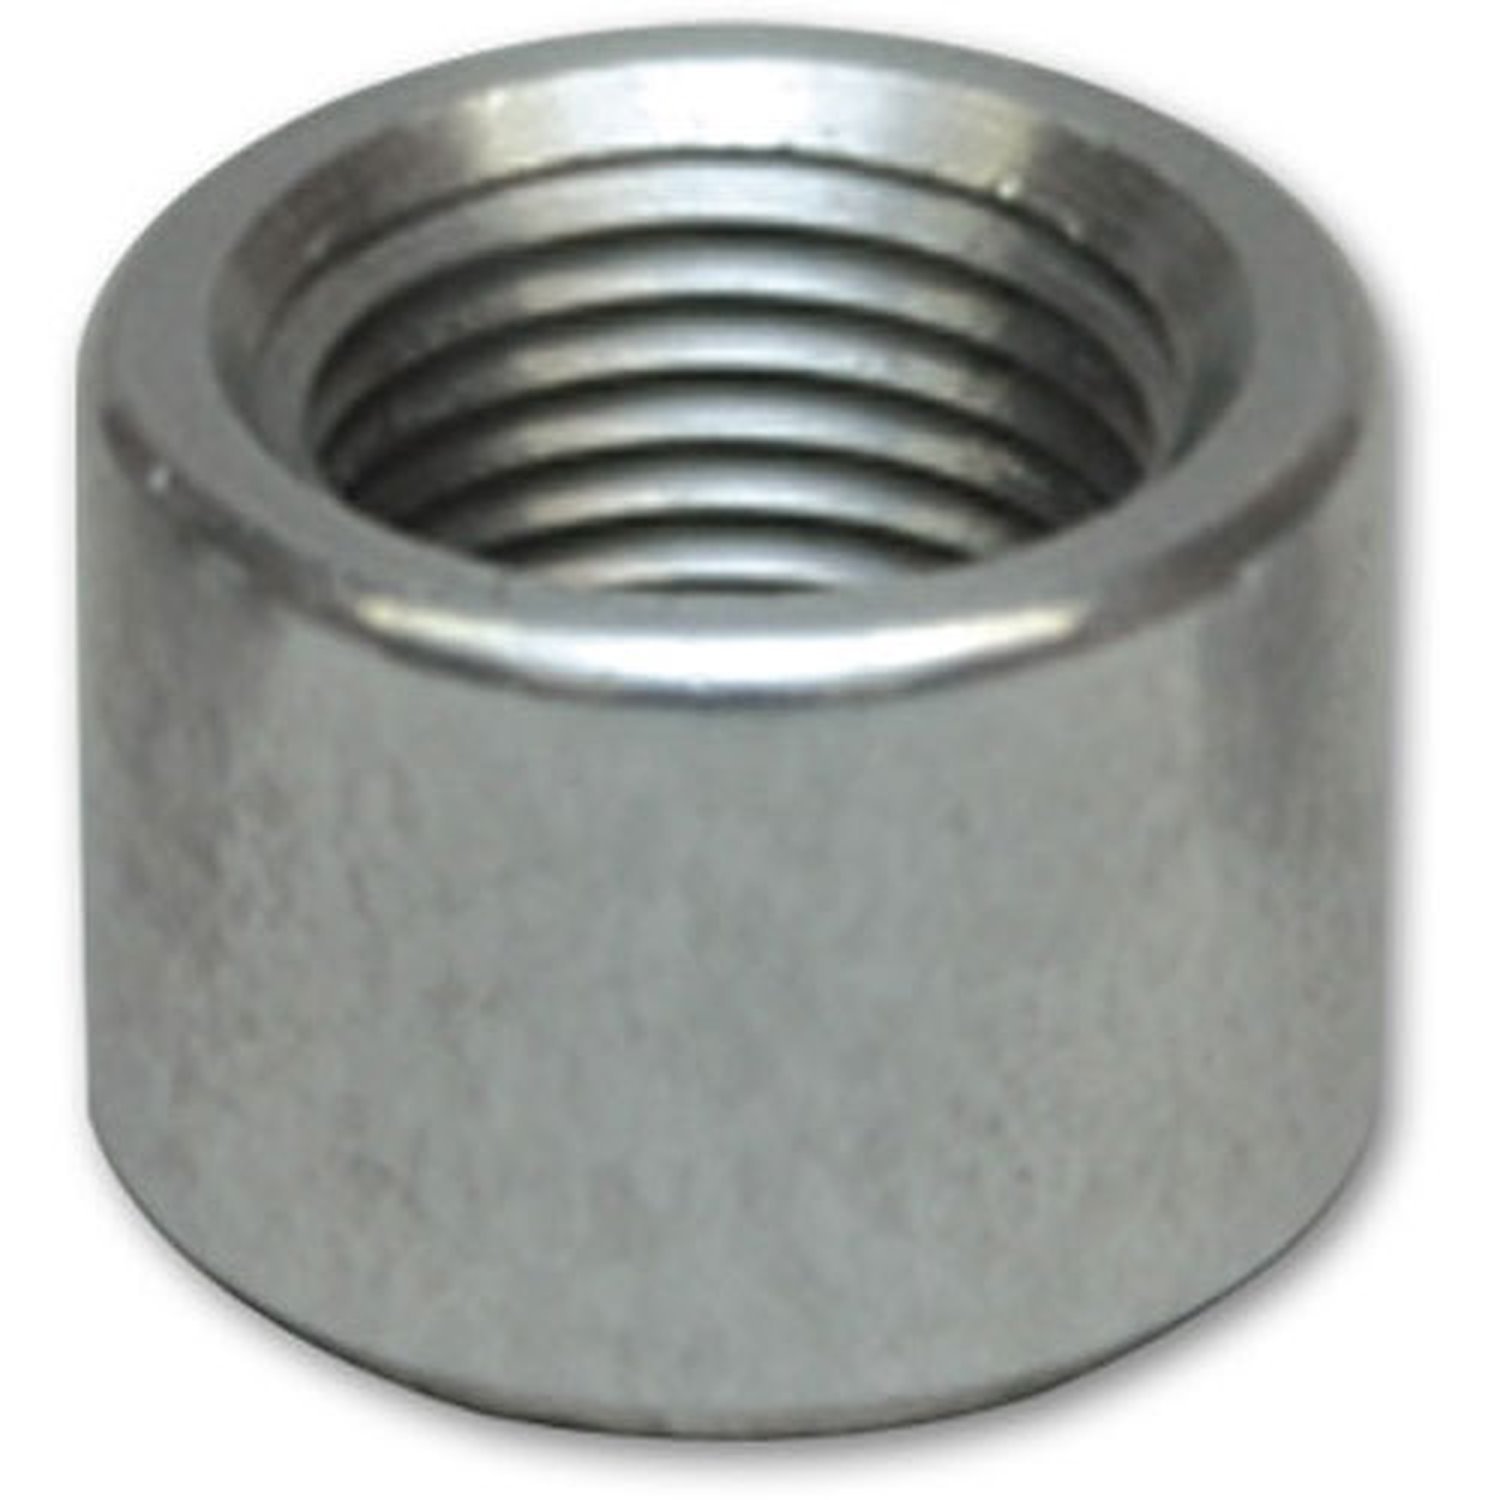 Female -12AN Aluminum Weld Bung 1-1/16" - 12 Thread